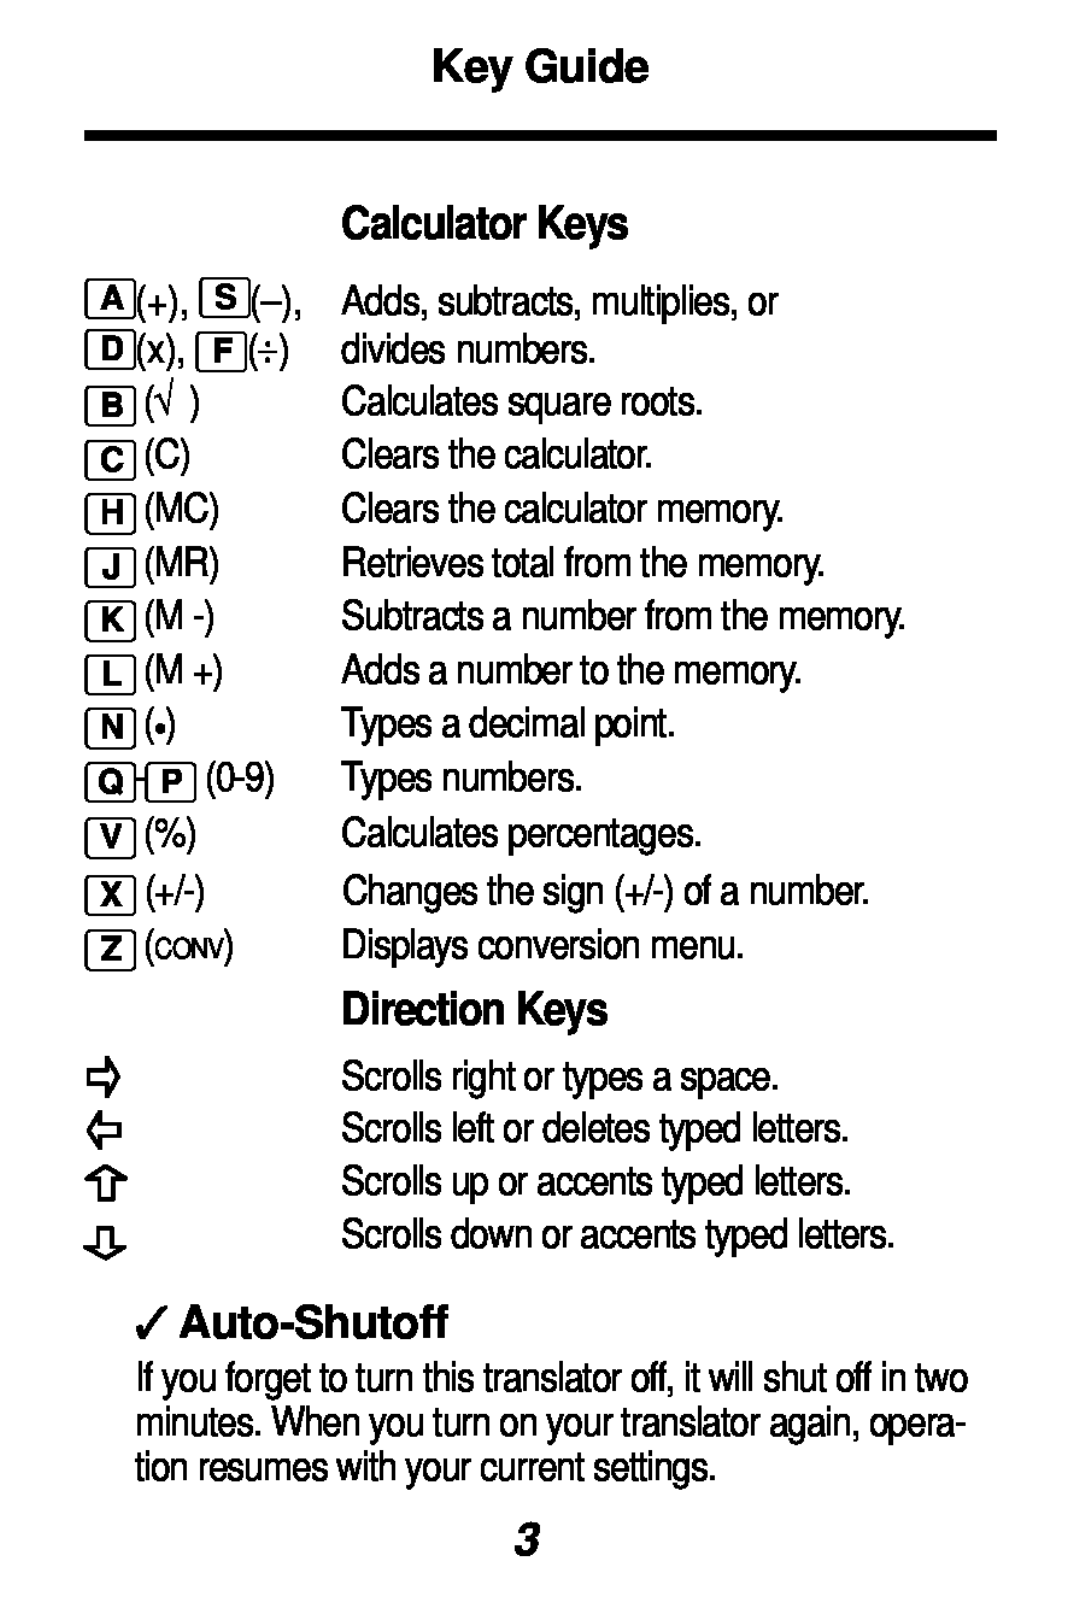 Franklin TES-106 manual Key Guide, Calculator Keys, Direction Keys, Auto-Shutoff 